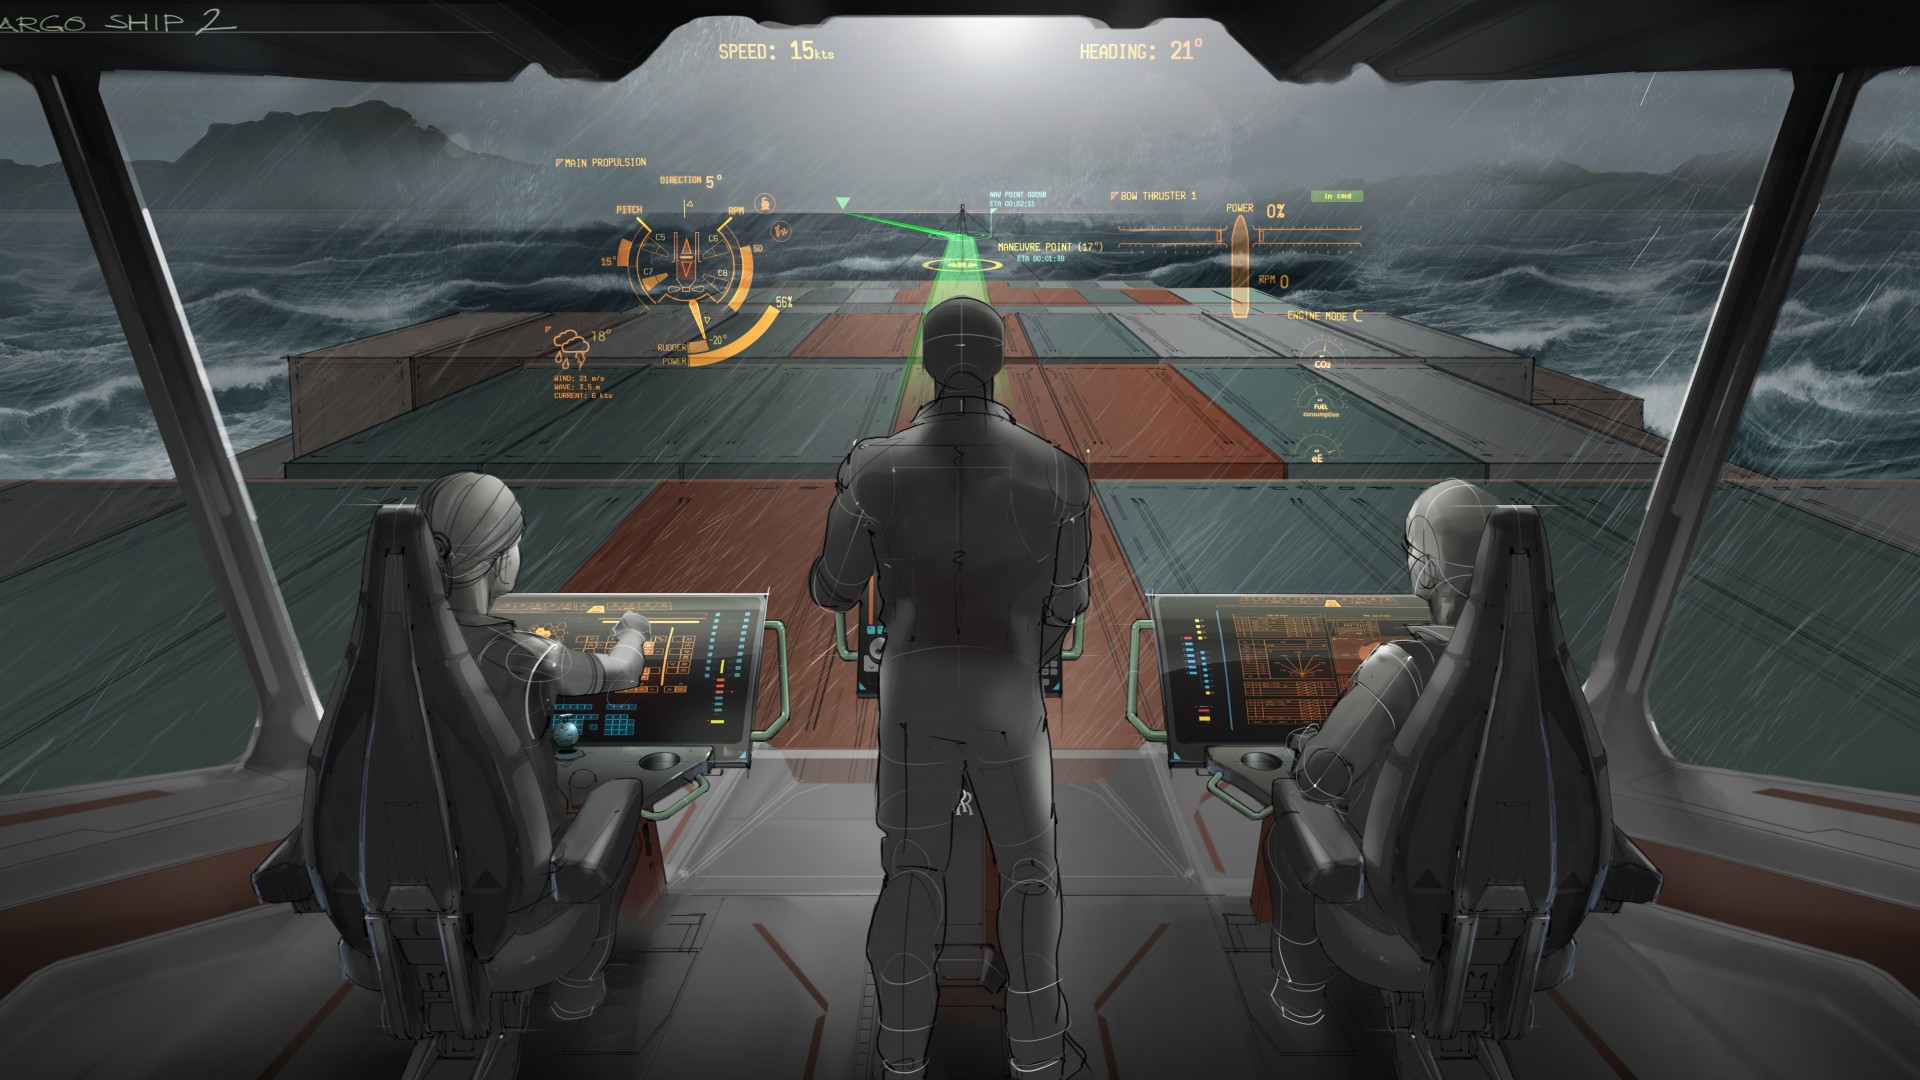 навигация грузового судна, 2025, будущее, капитанский мостик, cargo ship envisioning, 2025, future, illustration, bridge, containers (horizontal)